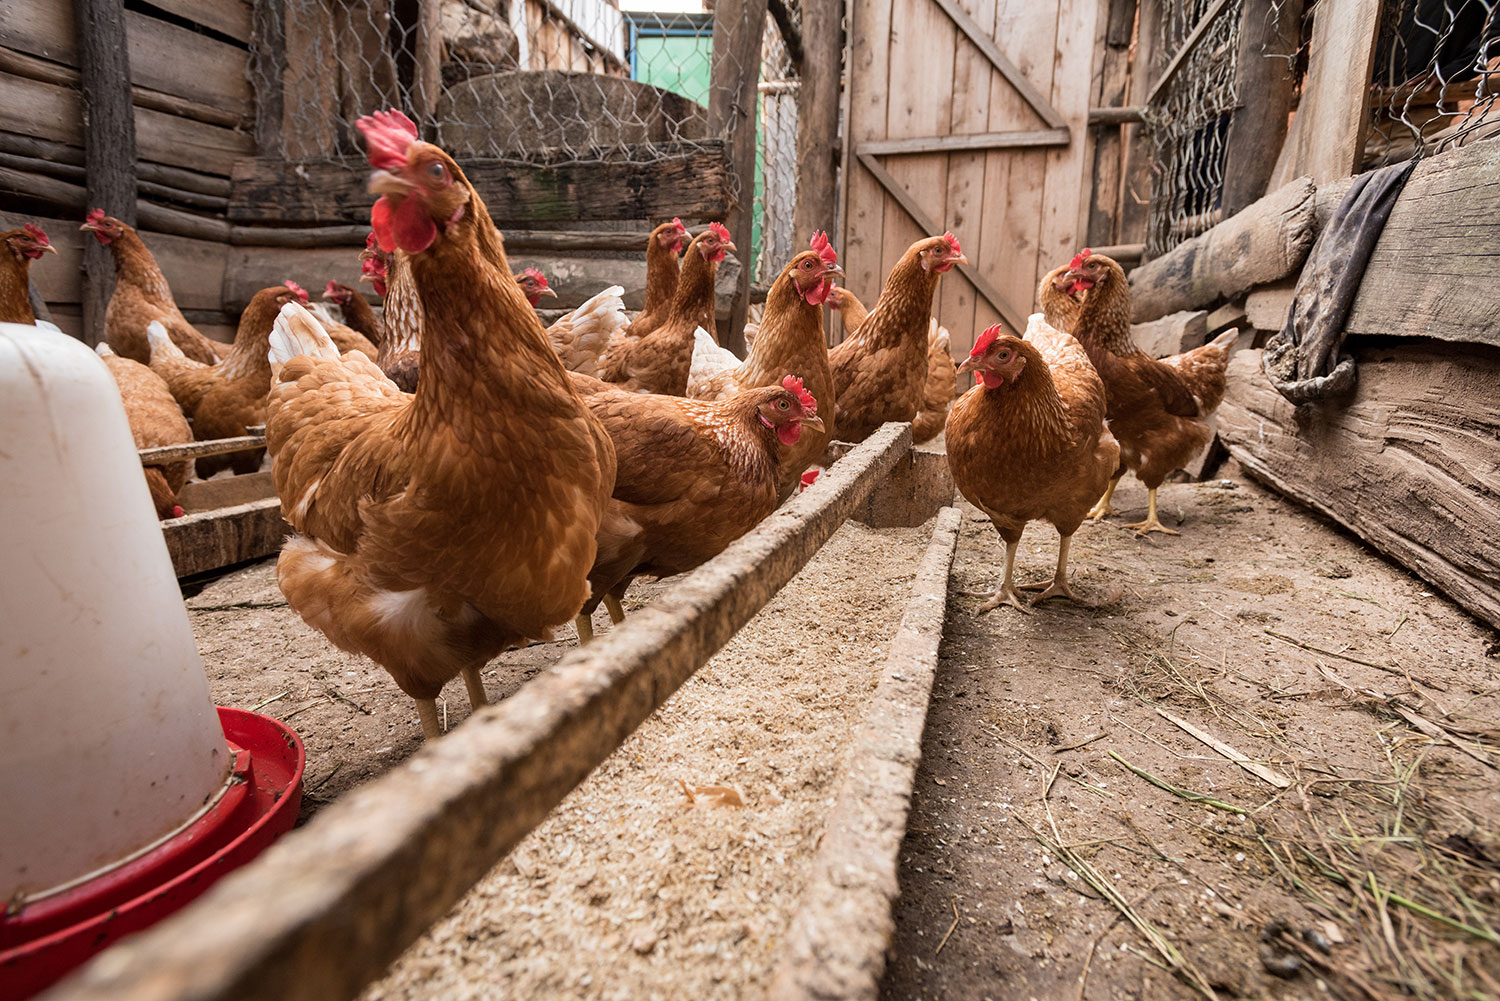 Phocus' chickens at his farm in Rwanda